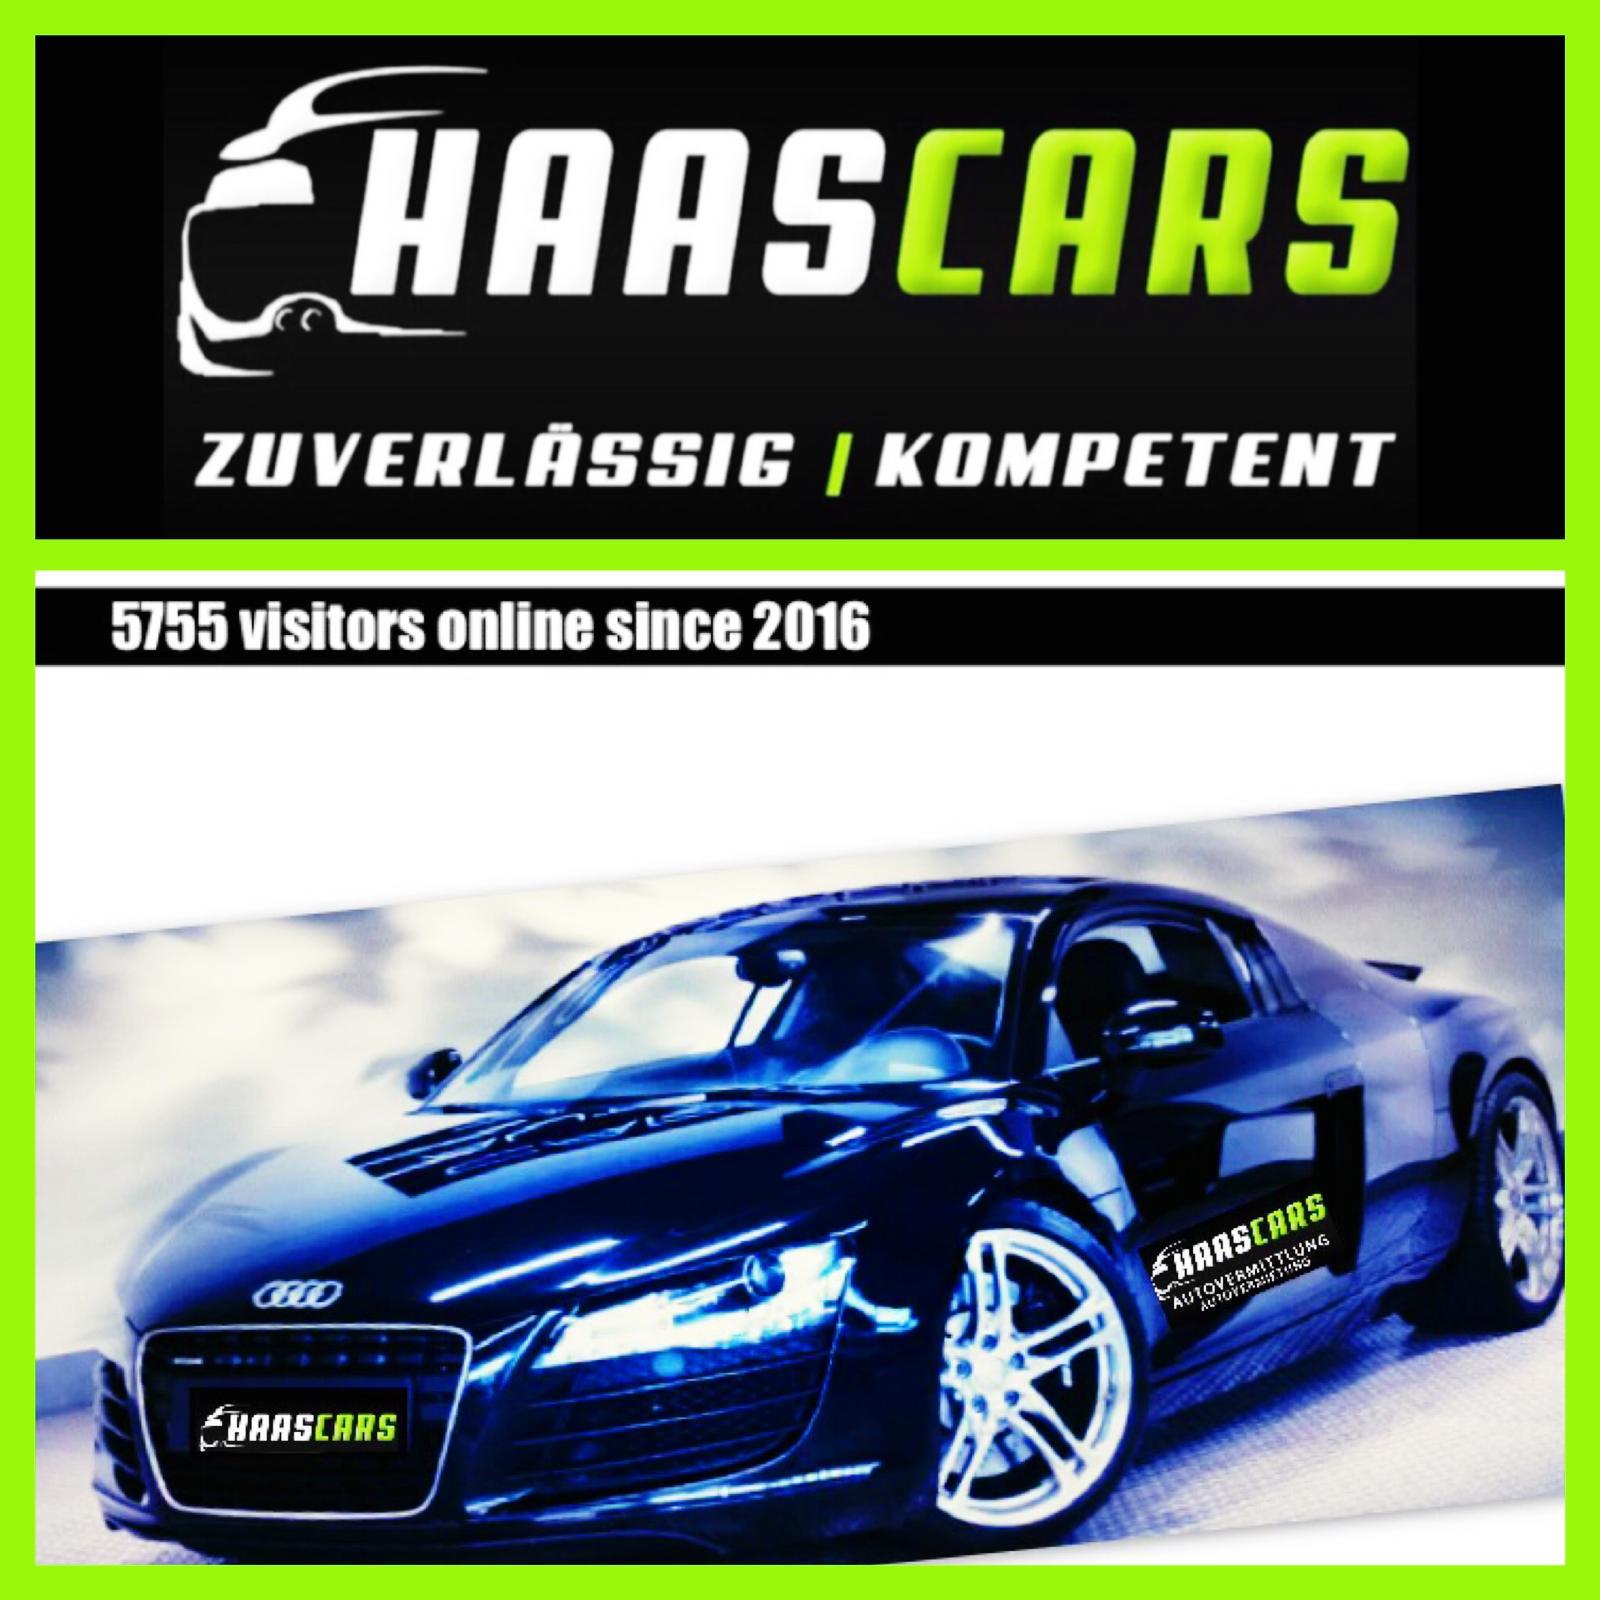 Haas Cars